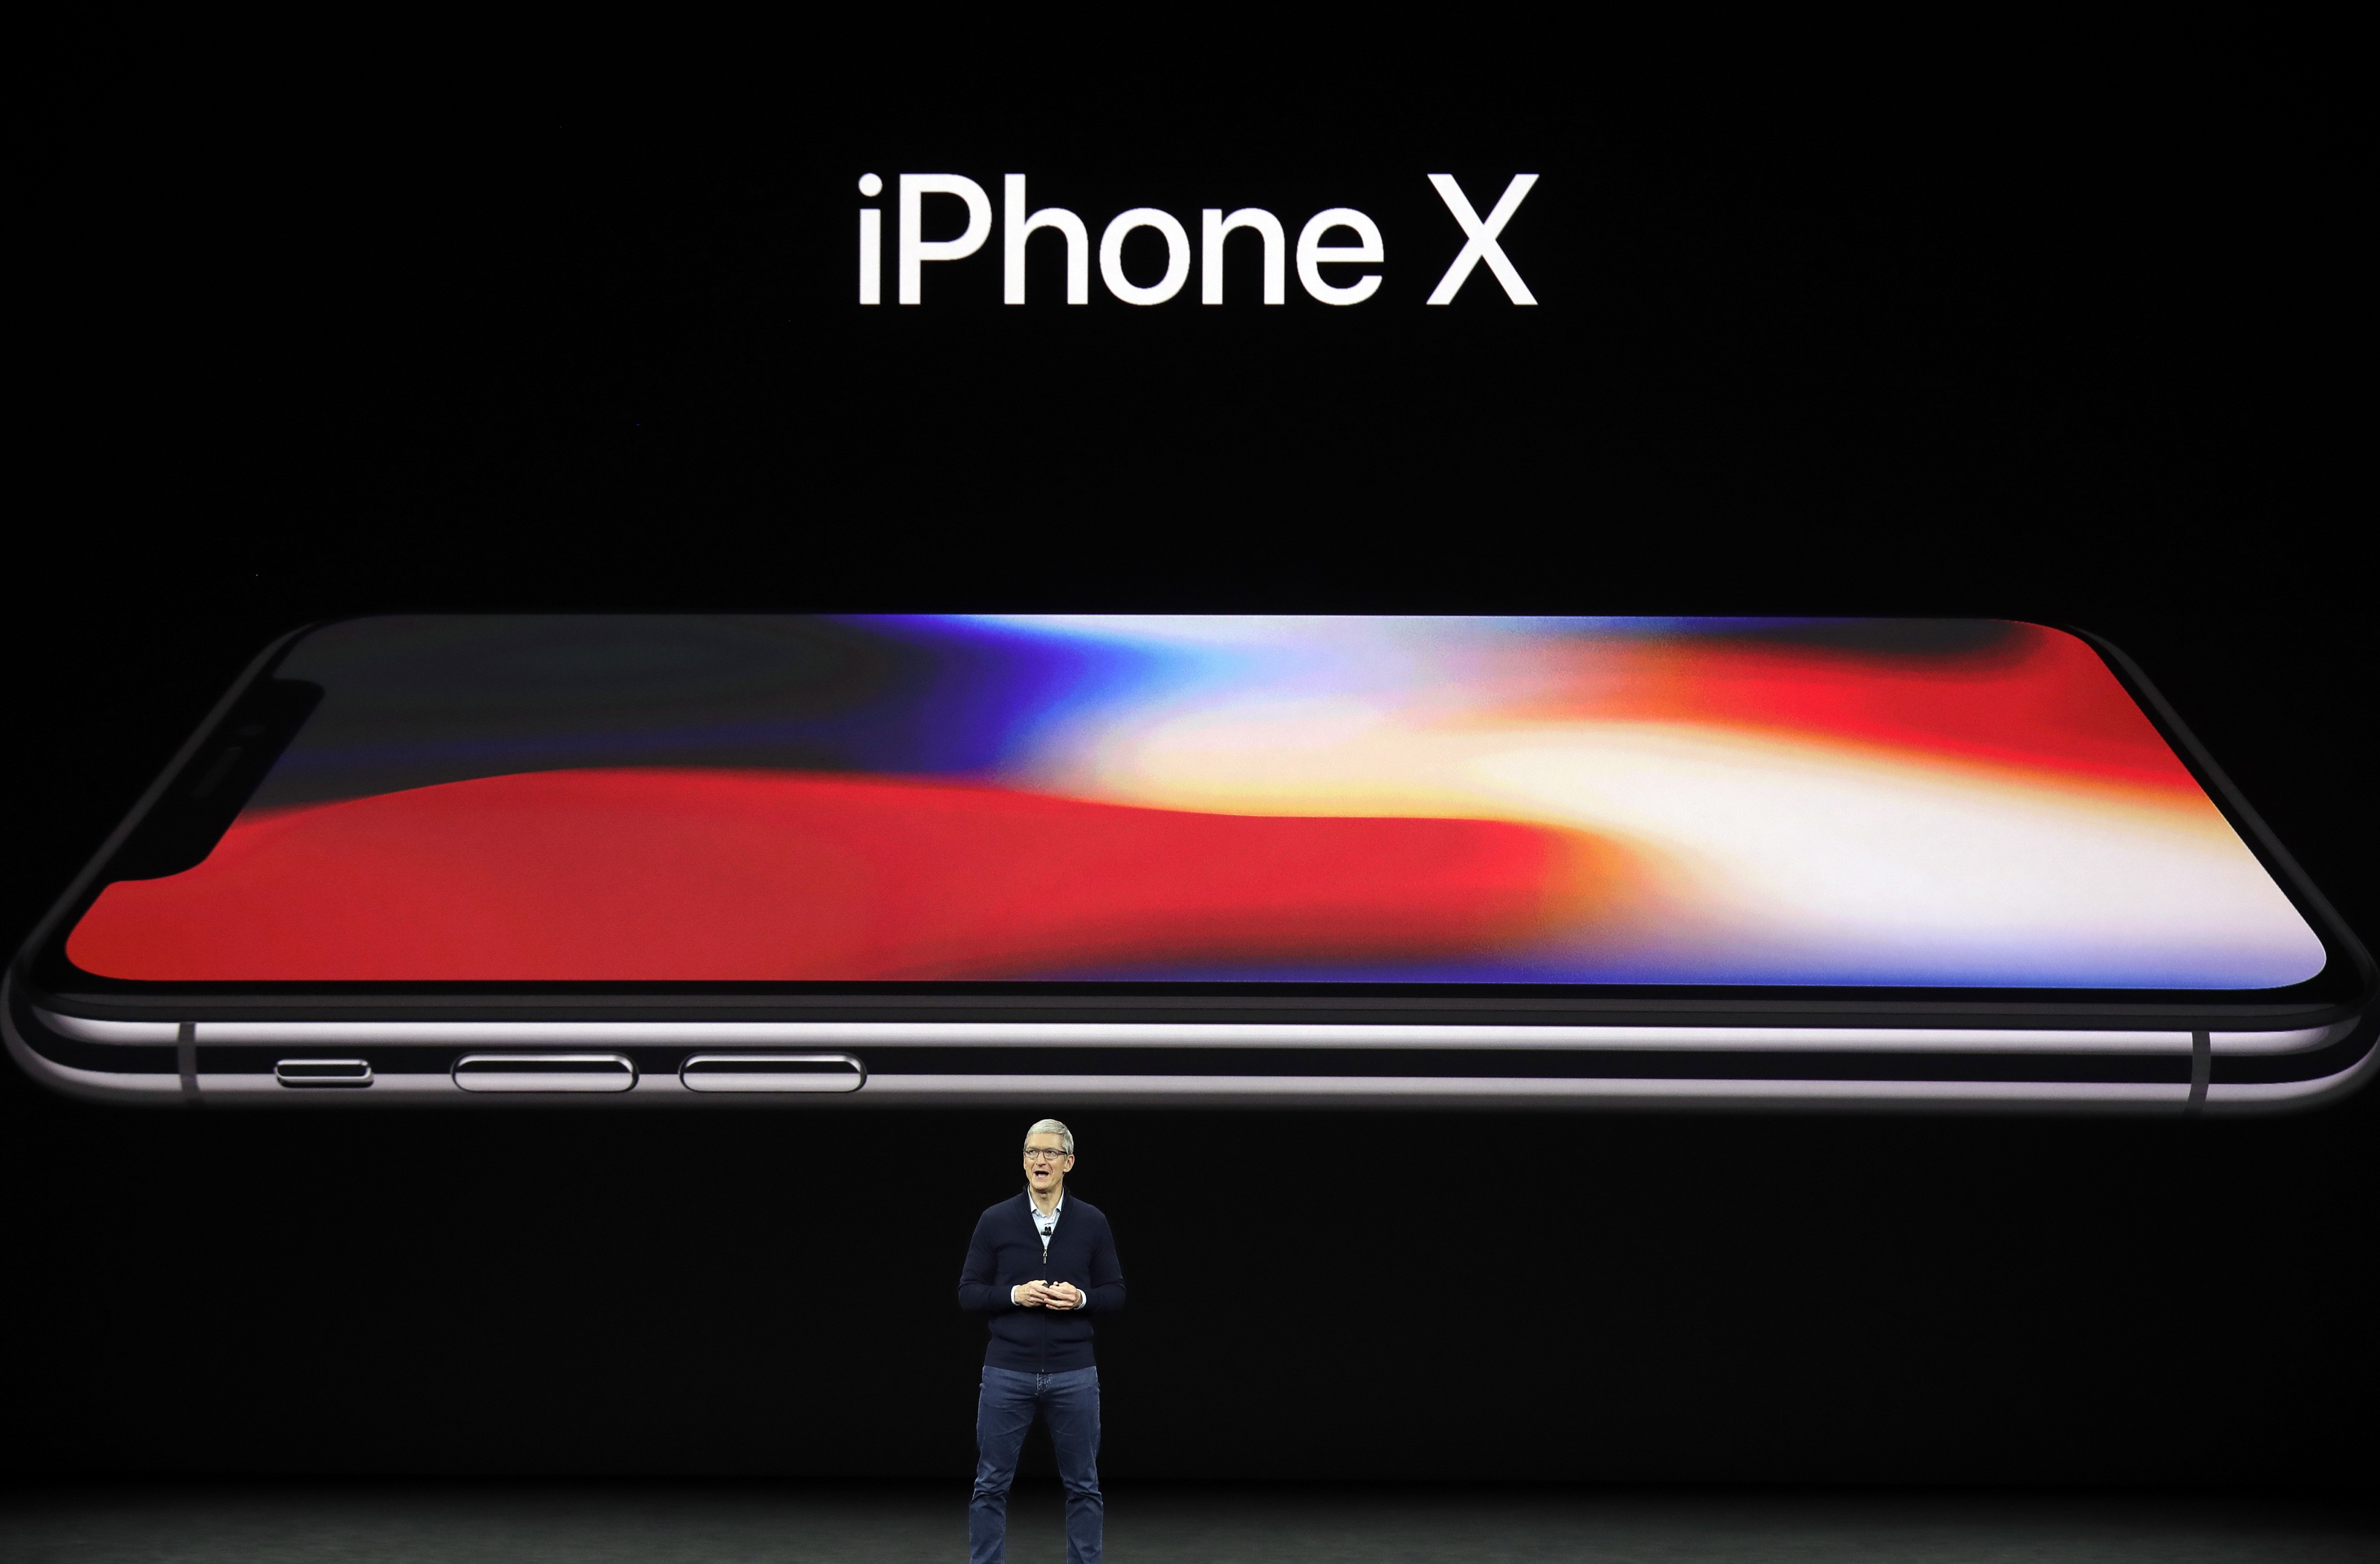 Tim Cook introduces iPhone X